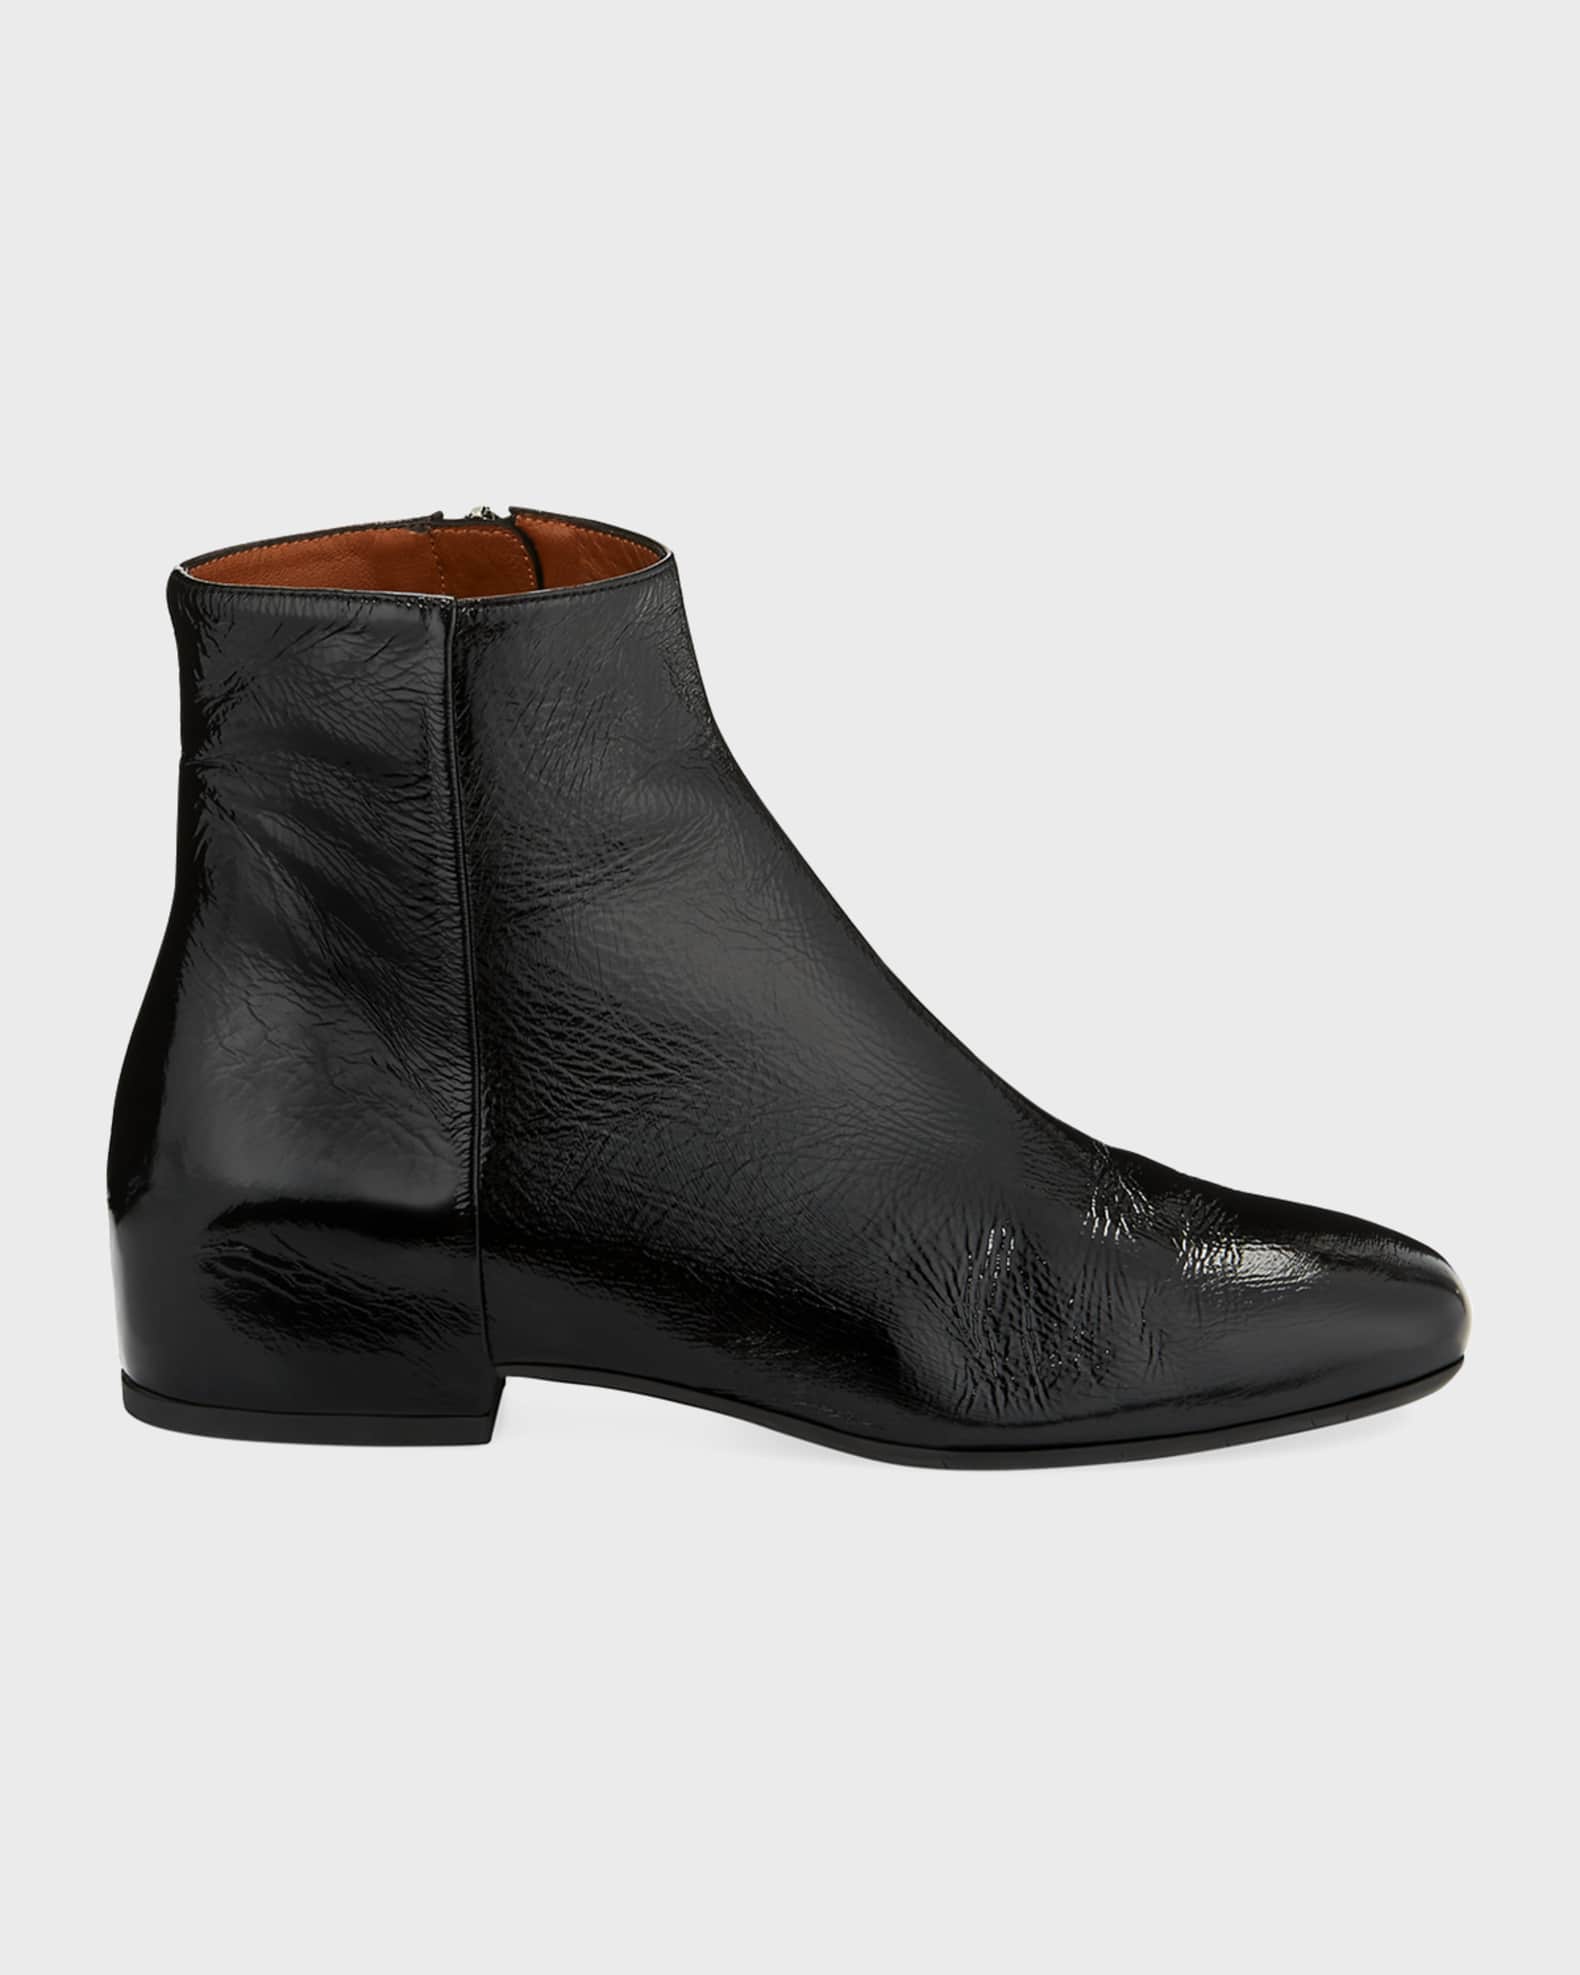 Aquatalia Ulyssa Leather Low-Heel Boot | Neiman Marcus